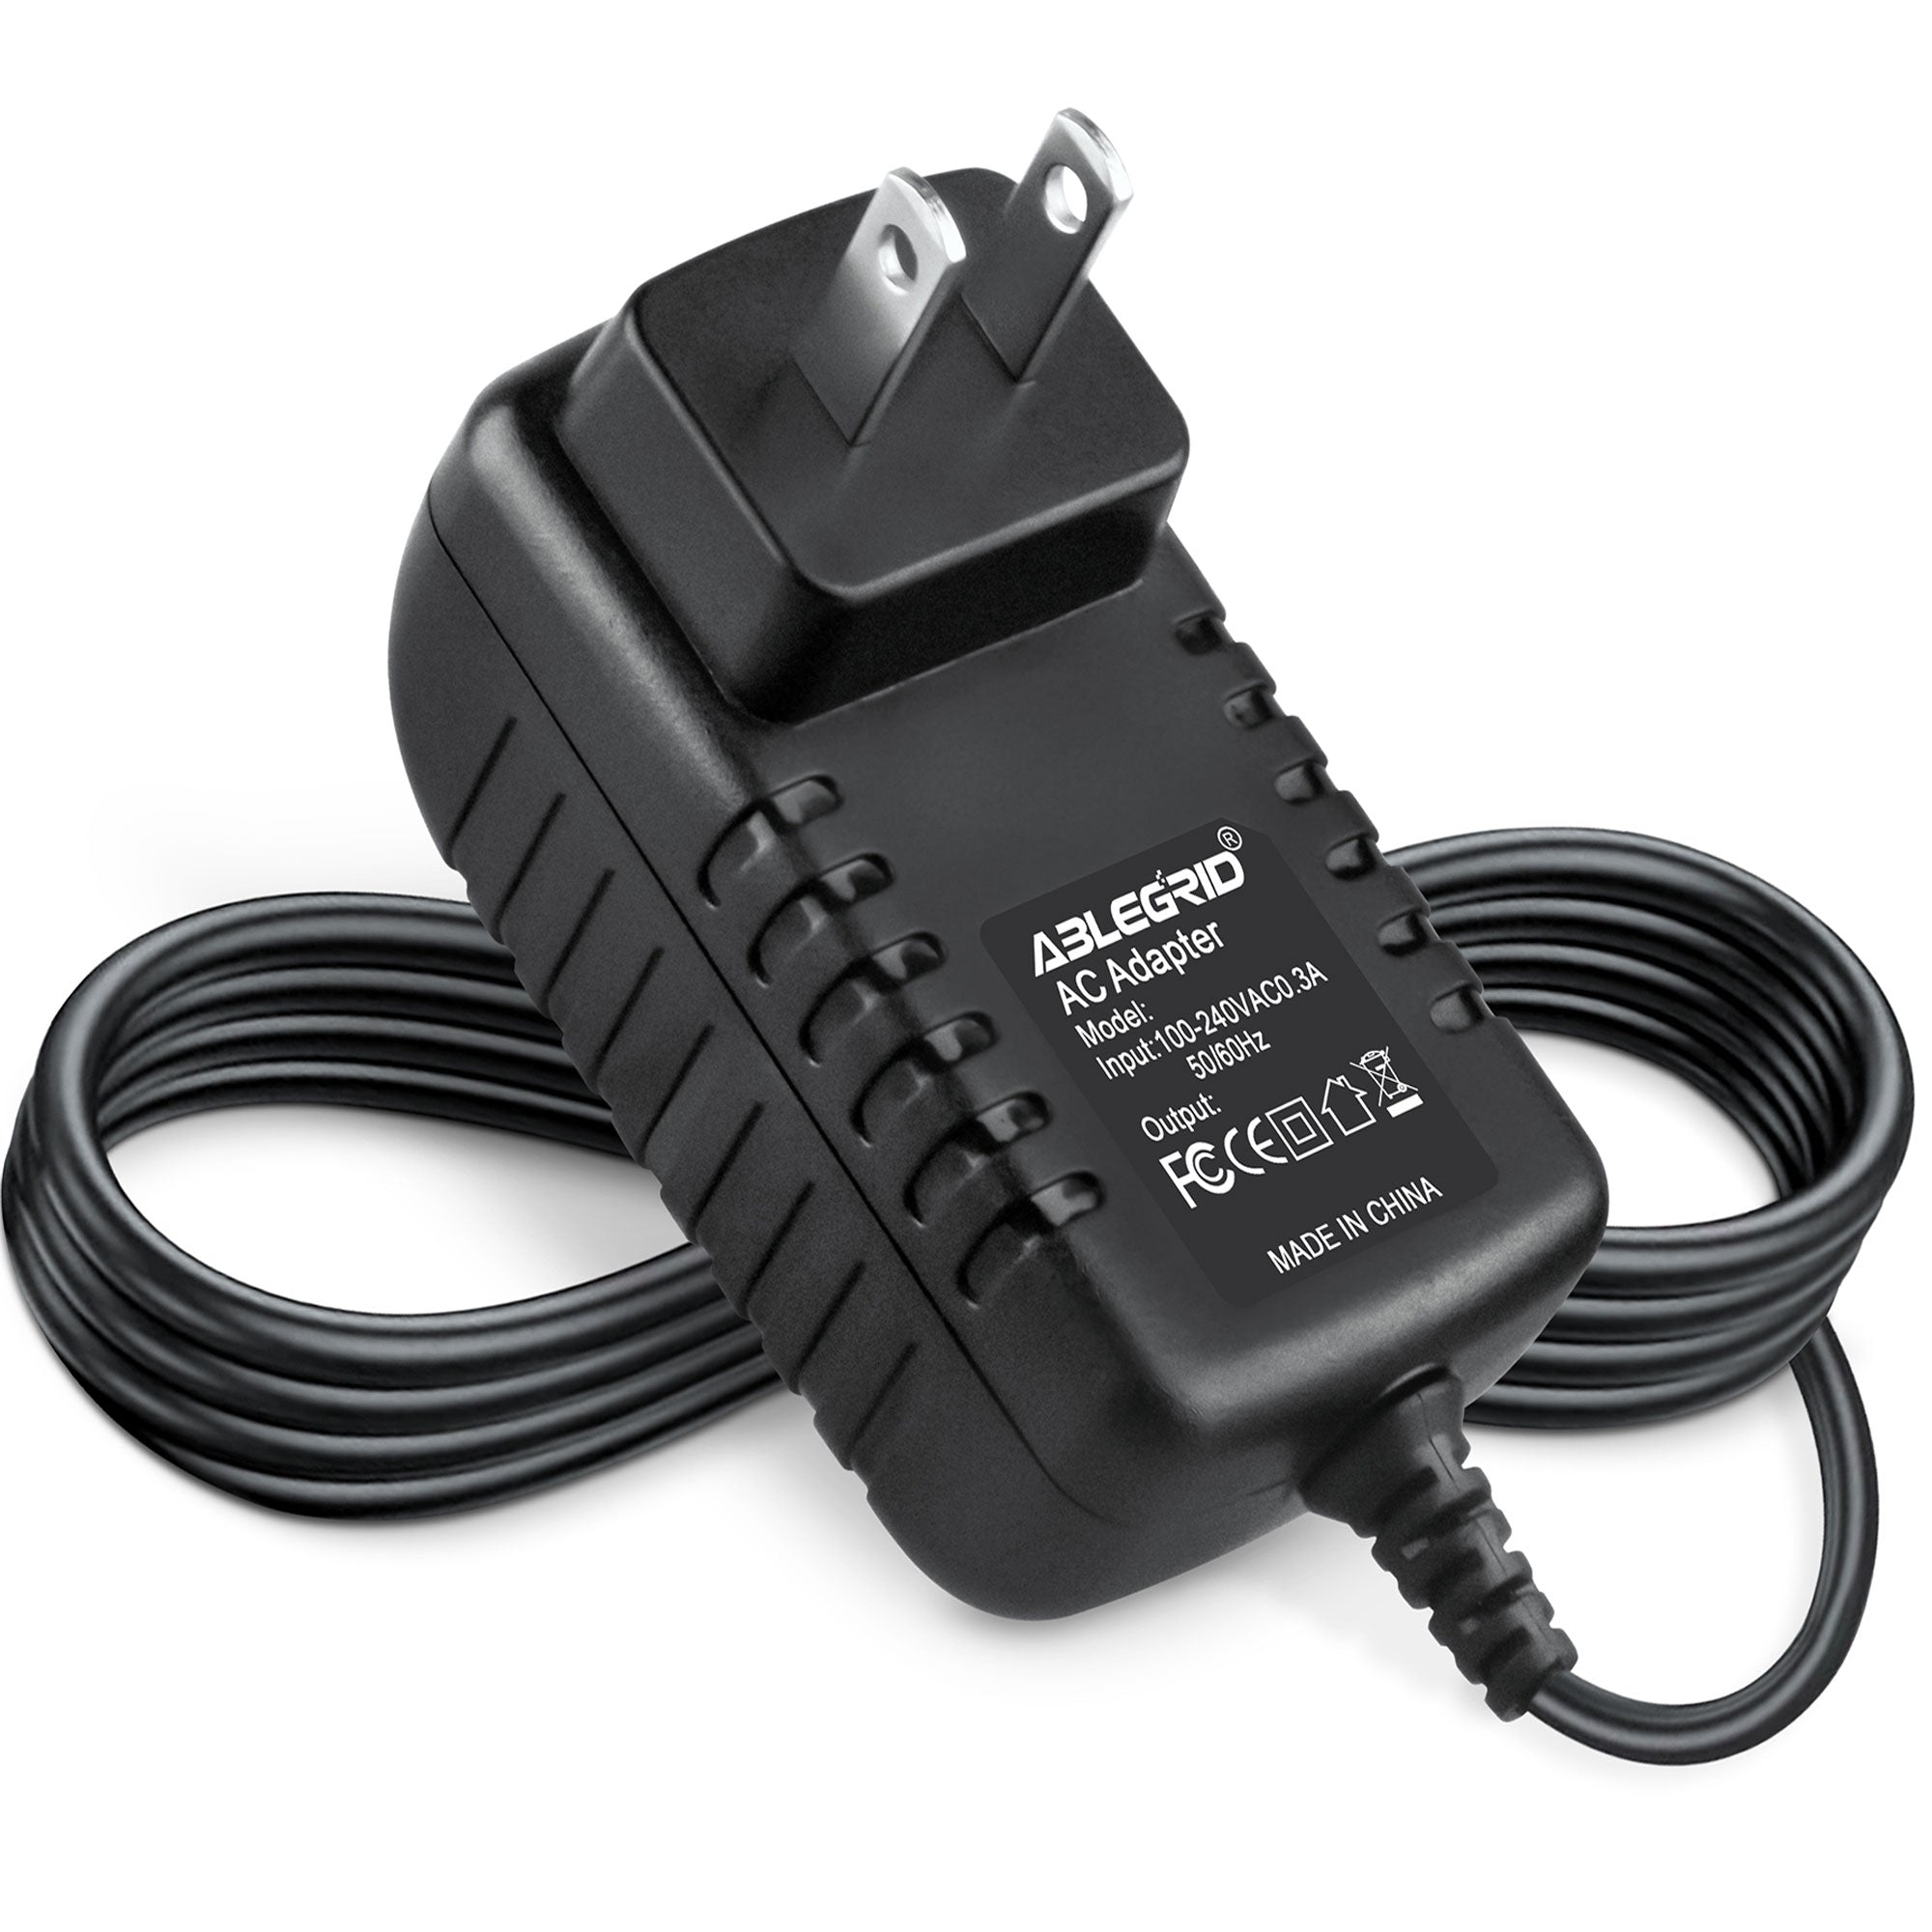 AbleGrid AC Adapter for Motorola 2580955Z02 NTN1174A HTN9014C Radio Charger Power Supply